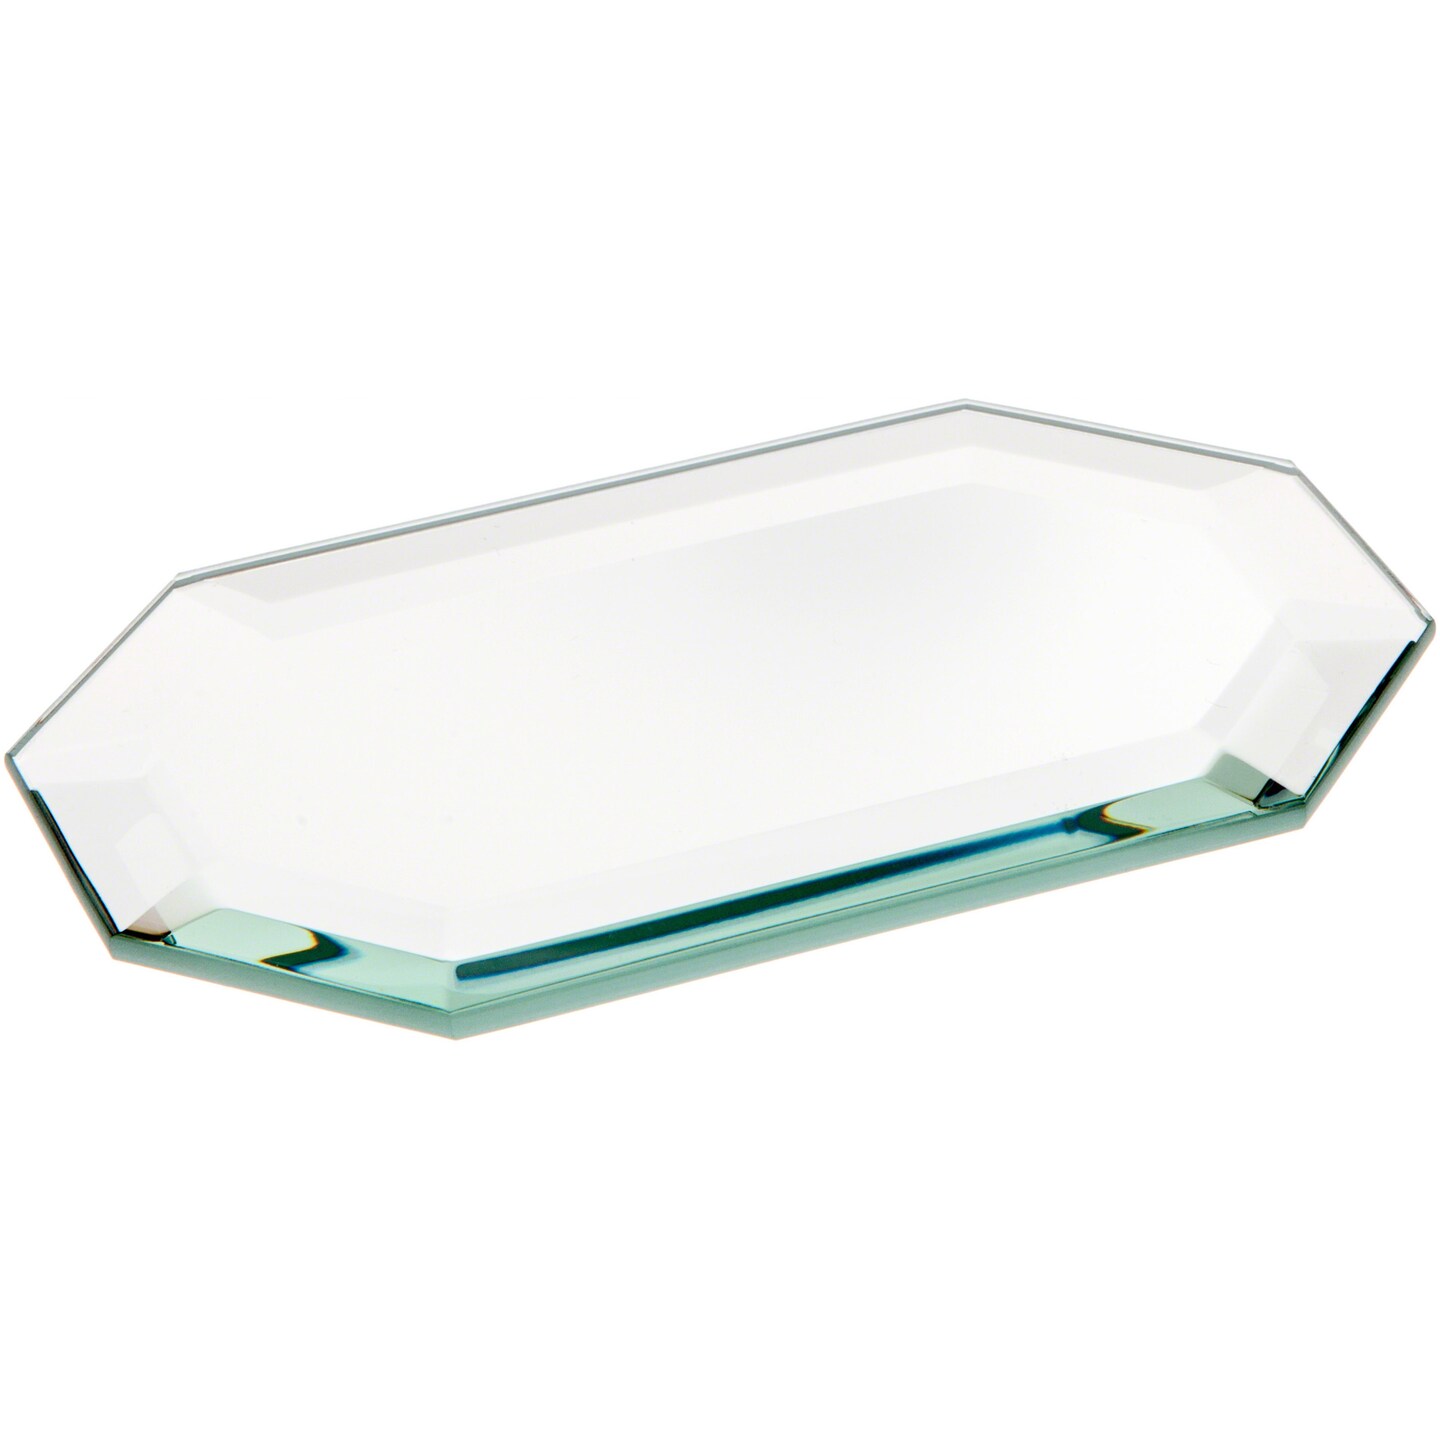 Plymor Long Octagon 5mm Beveled Glass Mirror, 3 inch x 5 inch